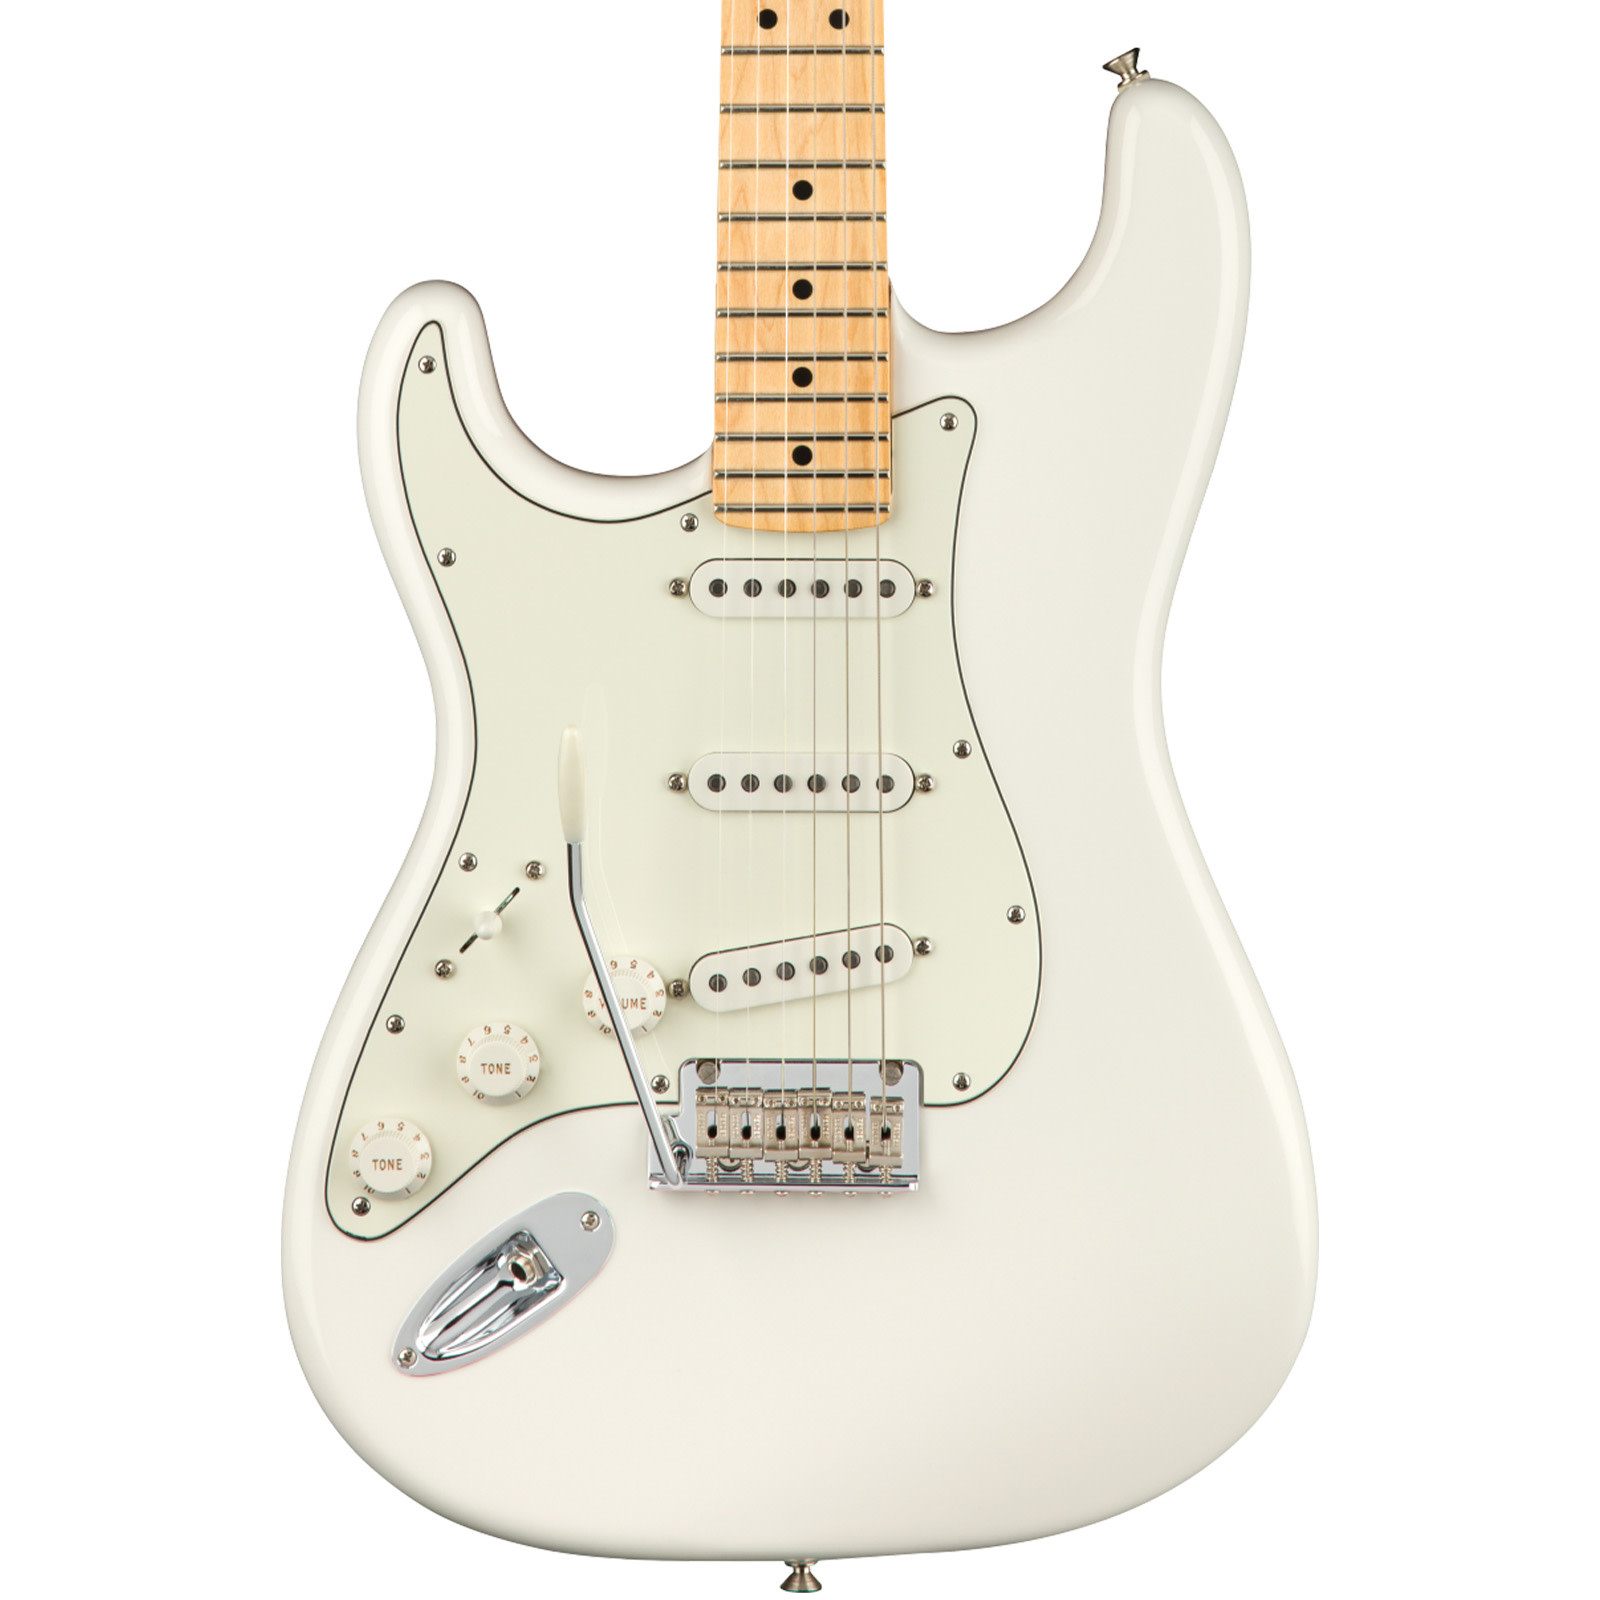 Электрогитара Johnson. Модель гитары вар. Fender Squier Stratocaster белый с блестящим пикгардом. Ernie Ball Cutlass Ivory White. Электрогитары ernie